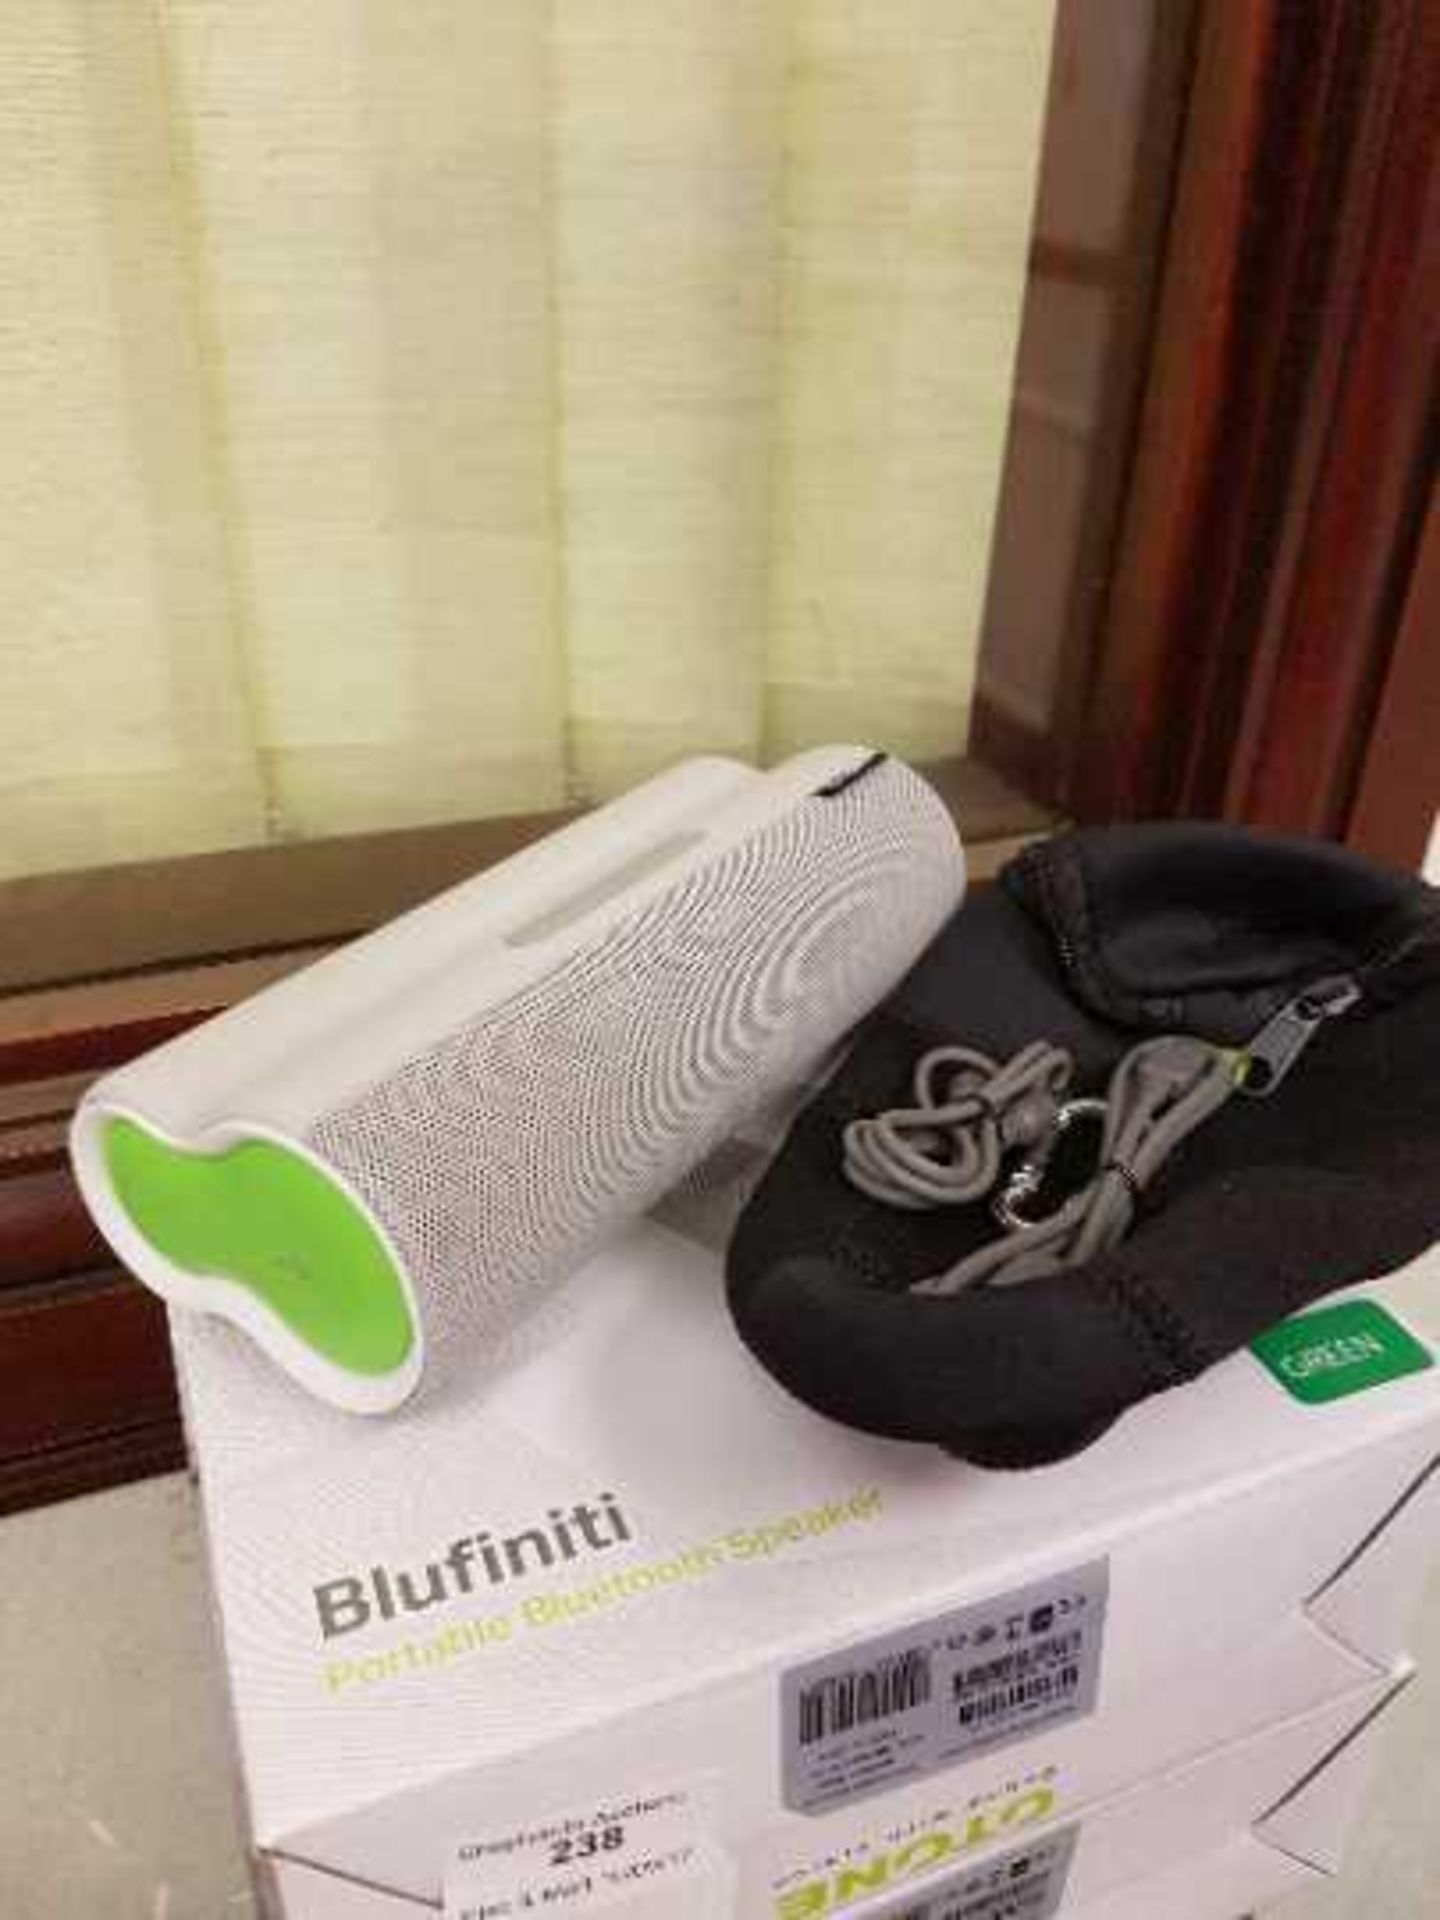 OTONE Blufiniti potable Bluetooth speaker, new and boxed RRP £59.99, Green